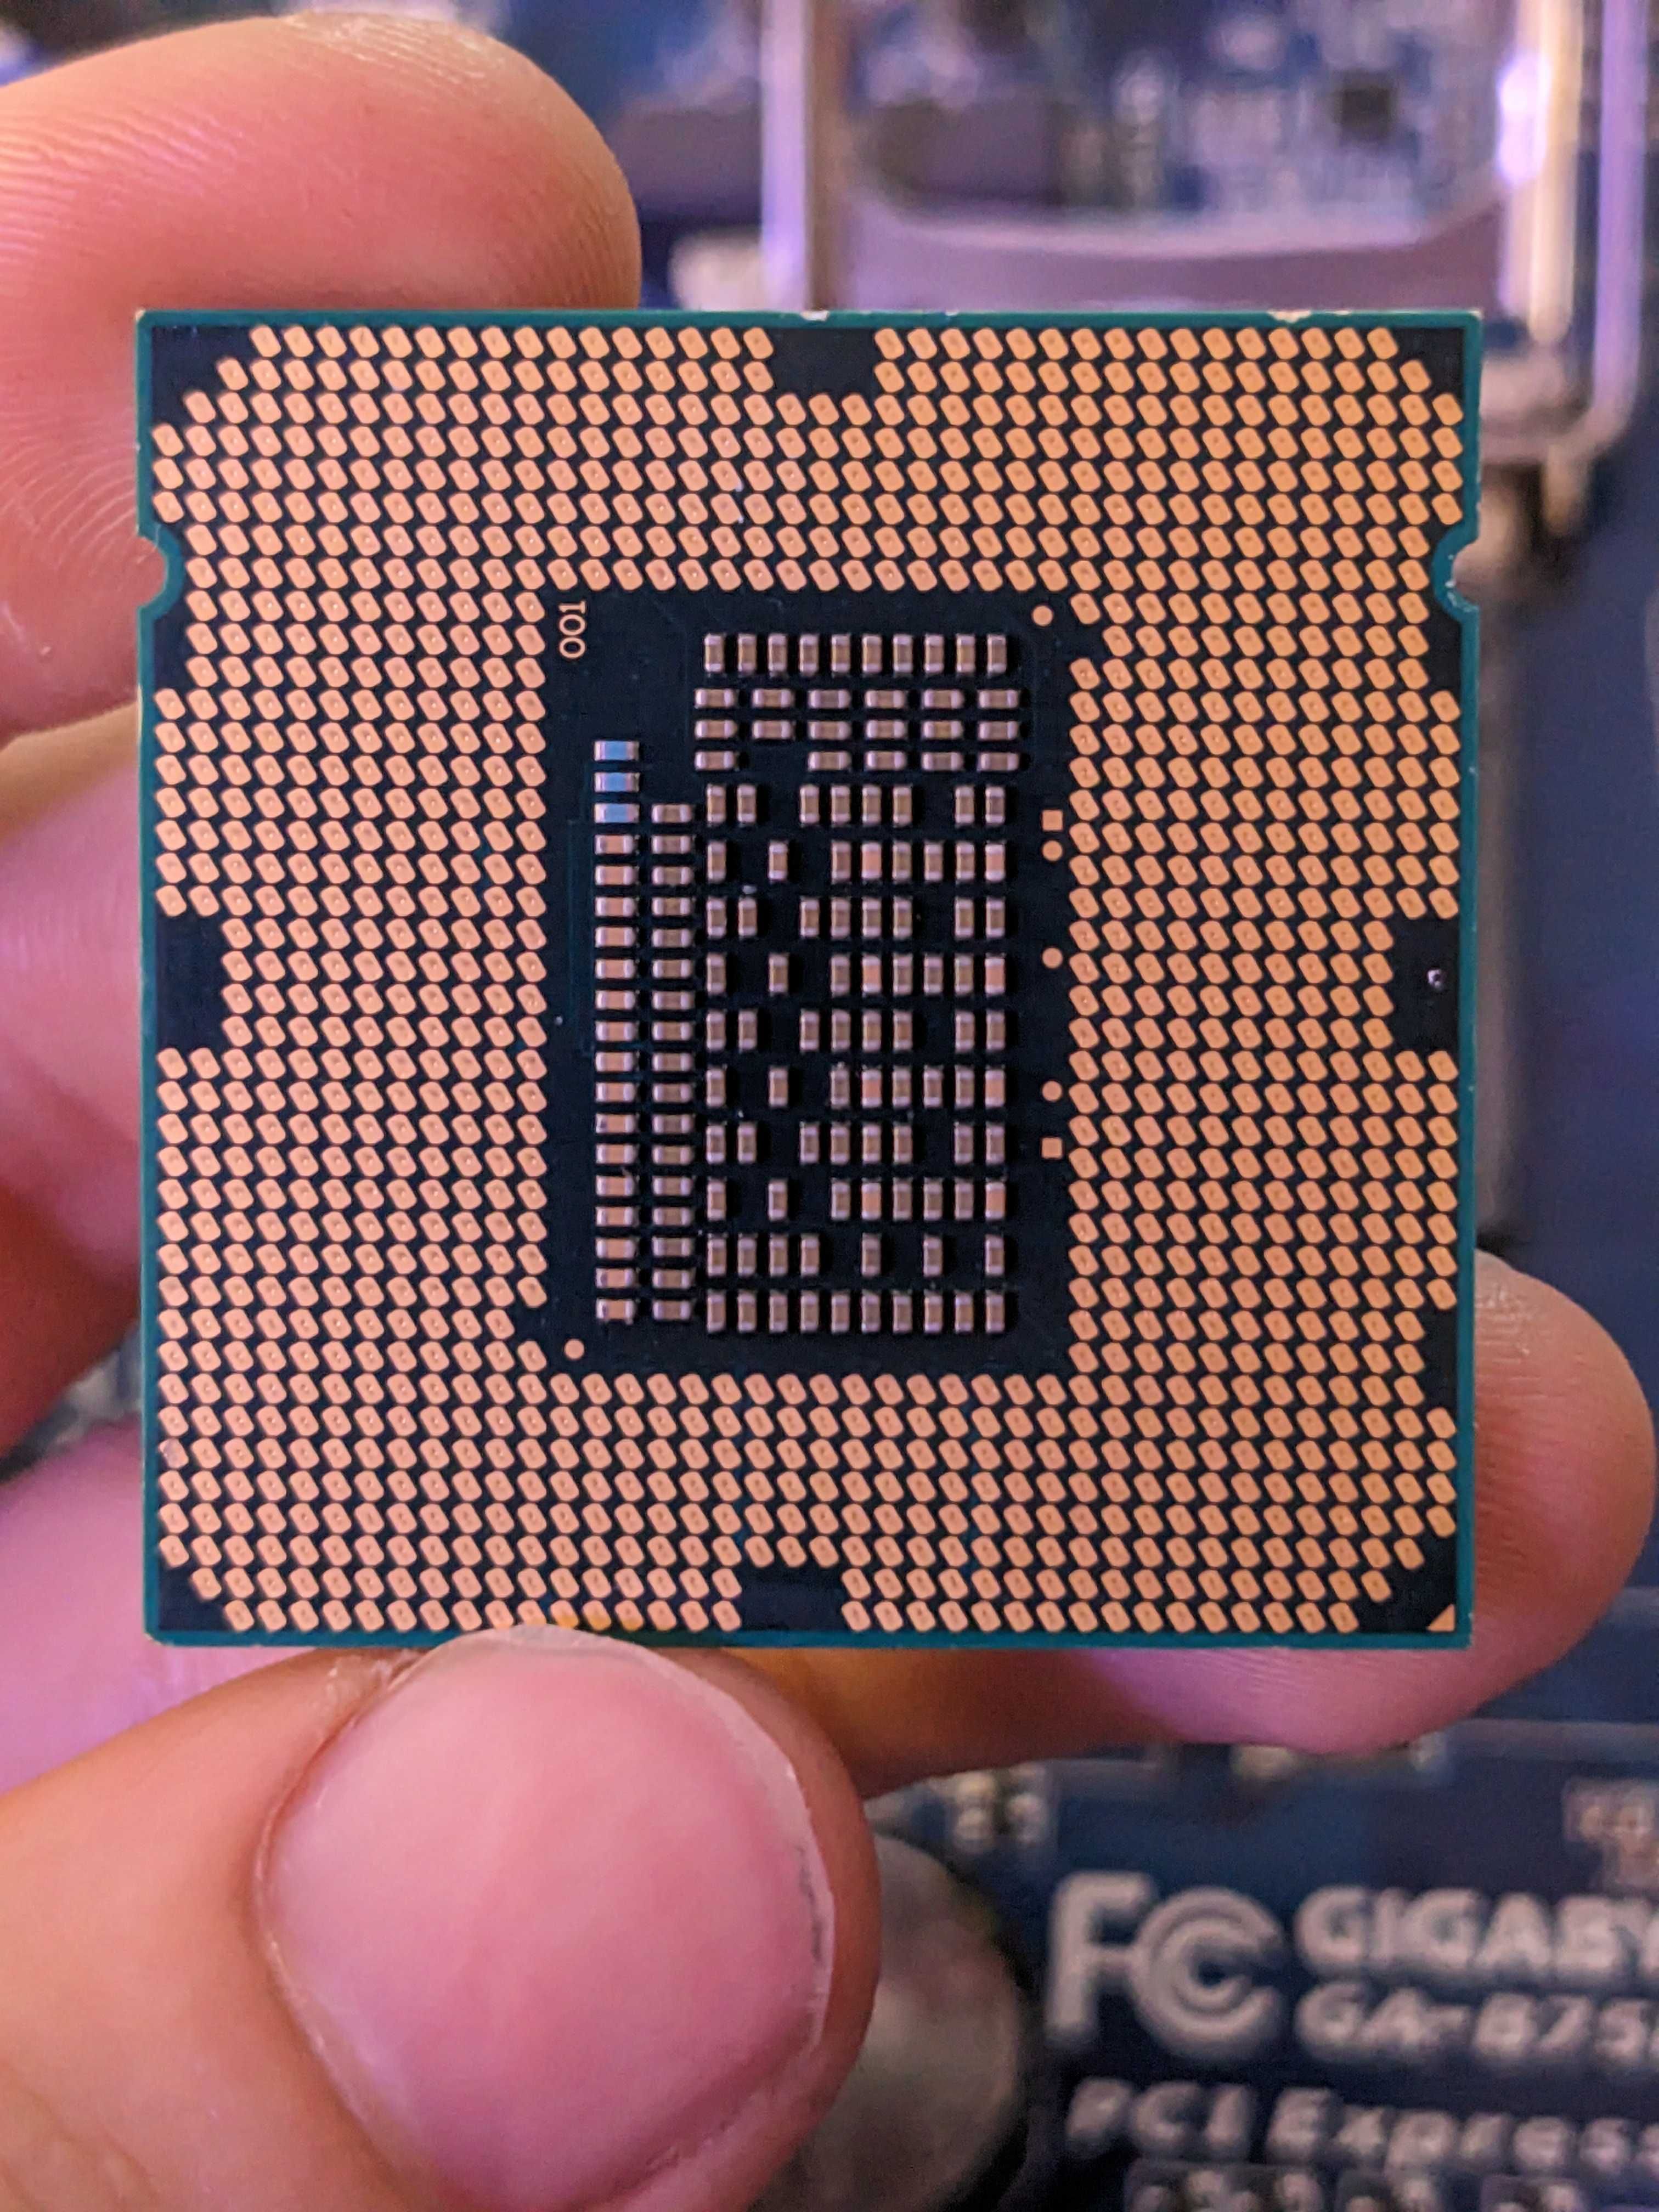 Intel Xeon E3-1245, e7400, socket 1155 GA-B75M-D2V, socket 775 G31D-M7